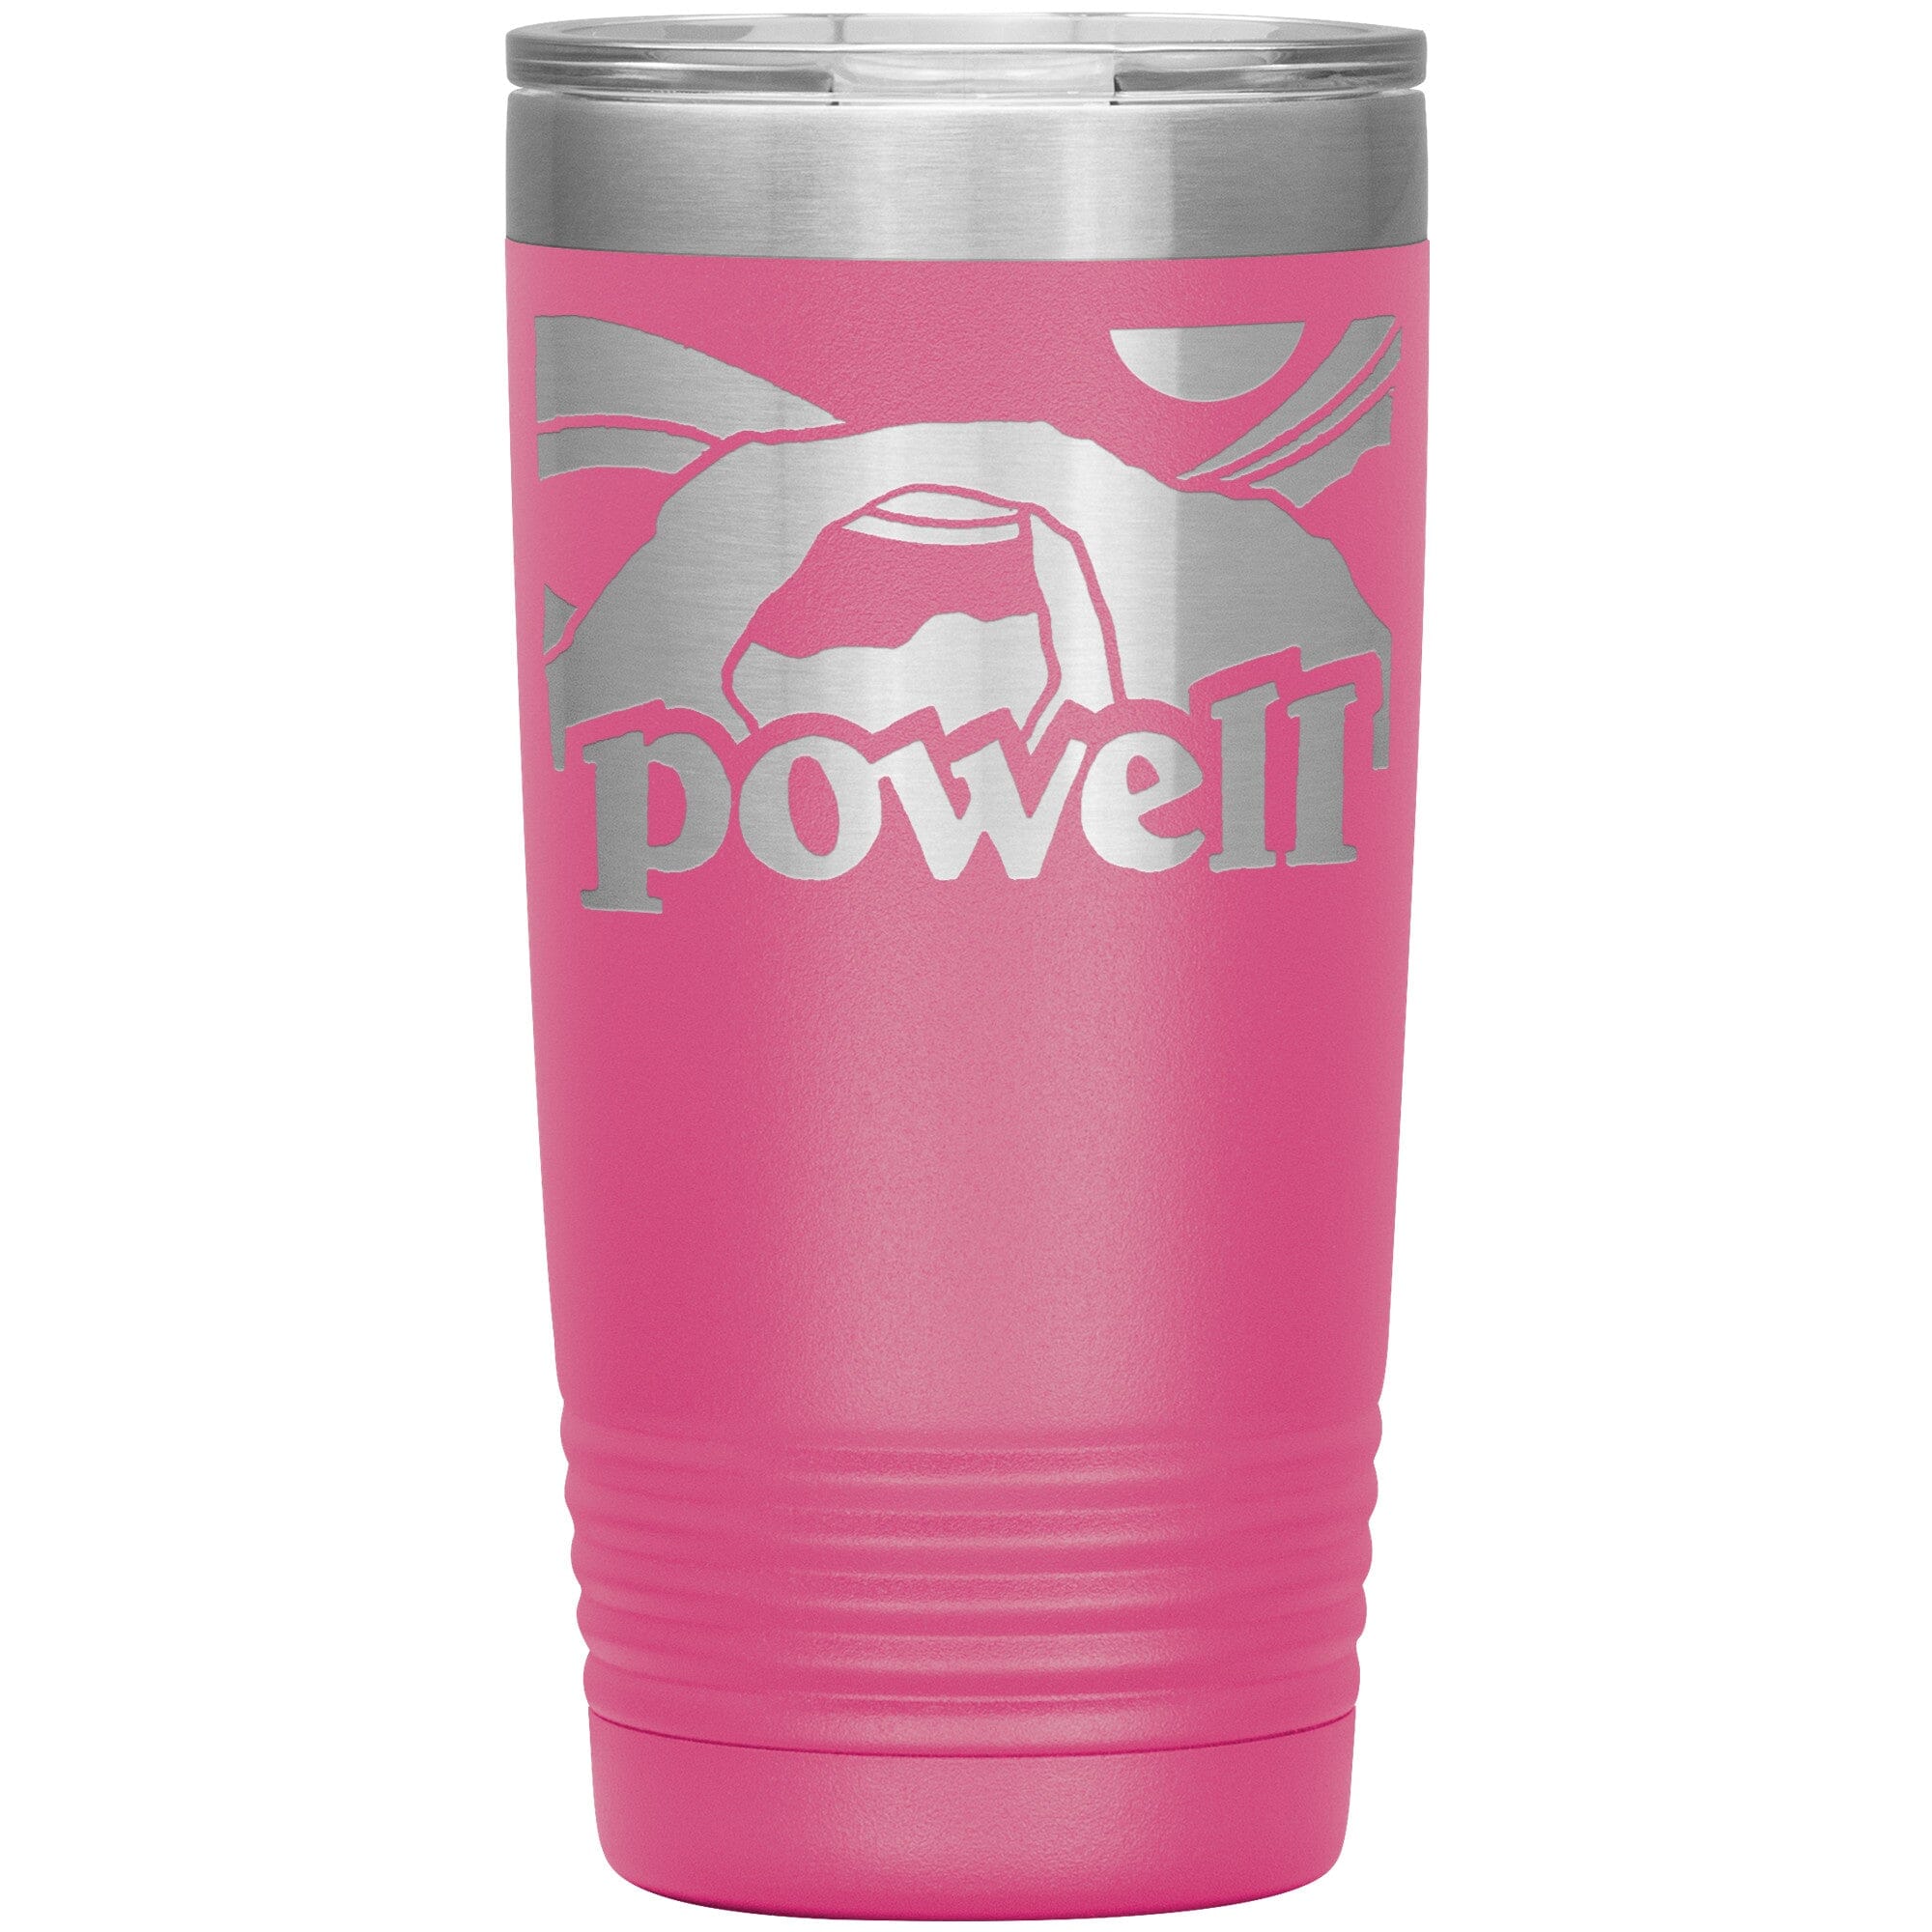 Retro Powell 20oz Tumbler Tumblers Pink 